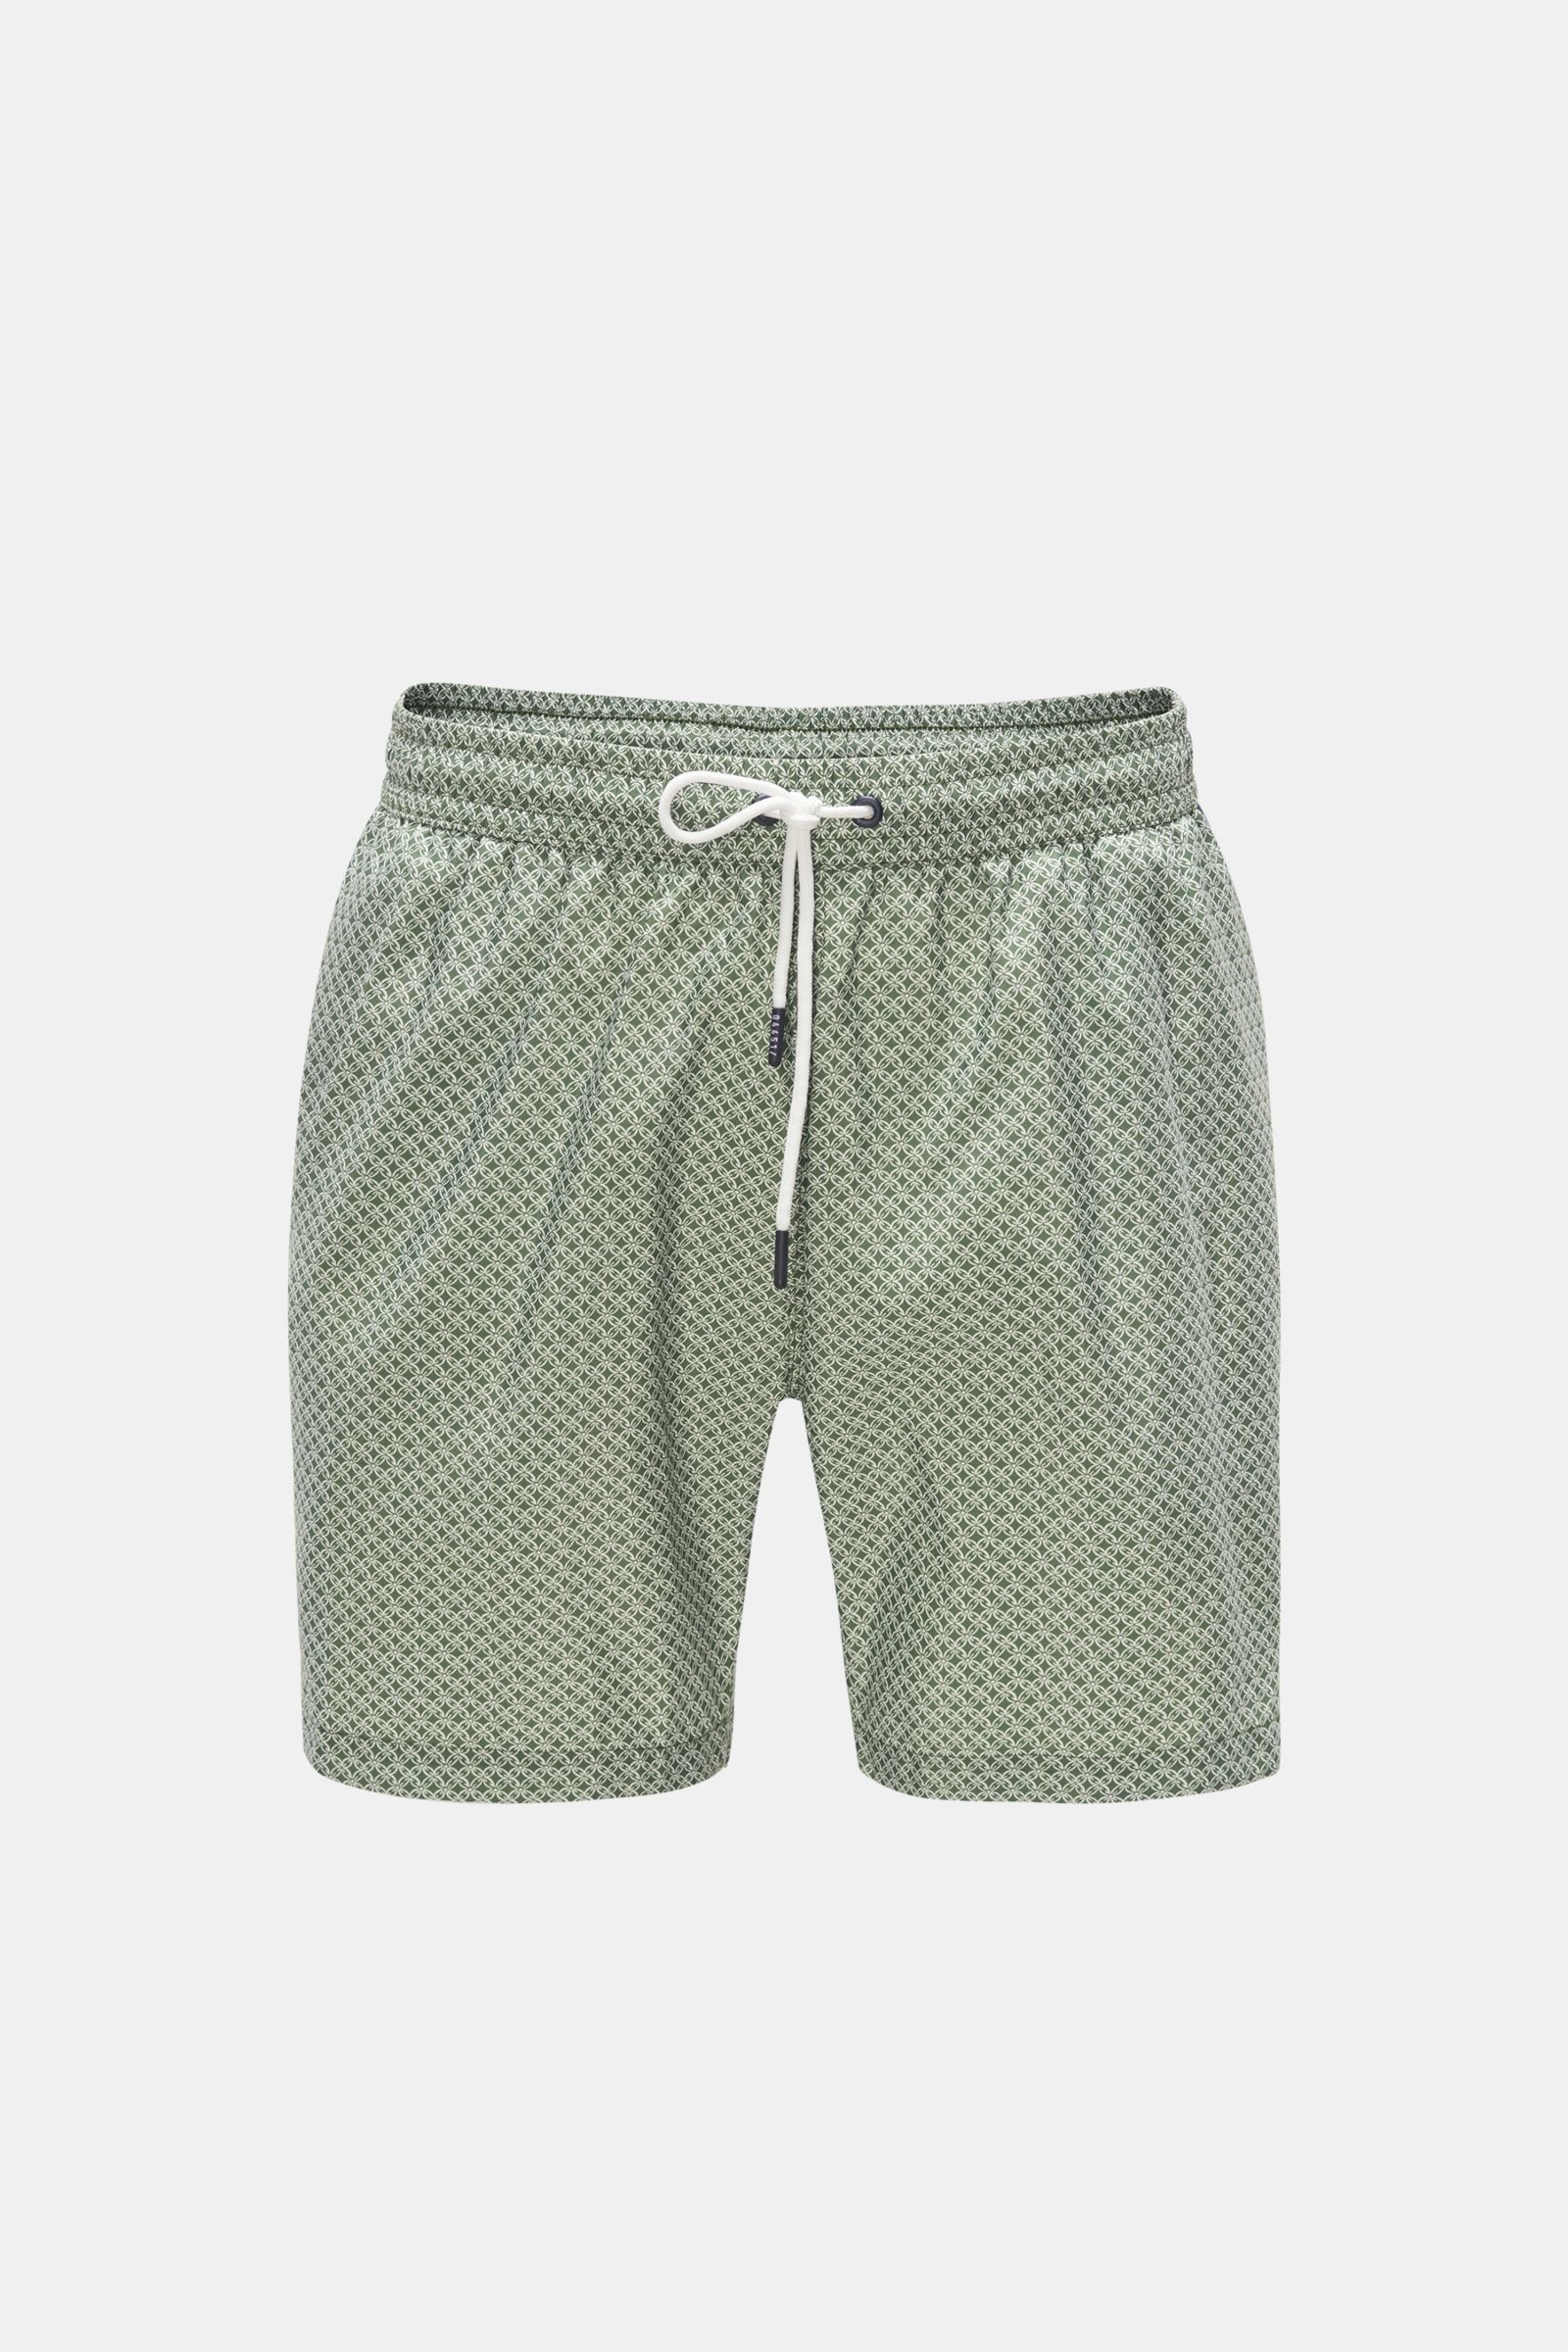 Swim shorts 'Tile Swim' olive/white patterned